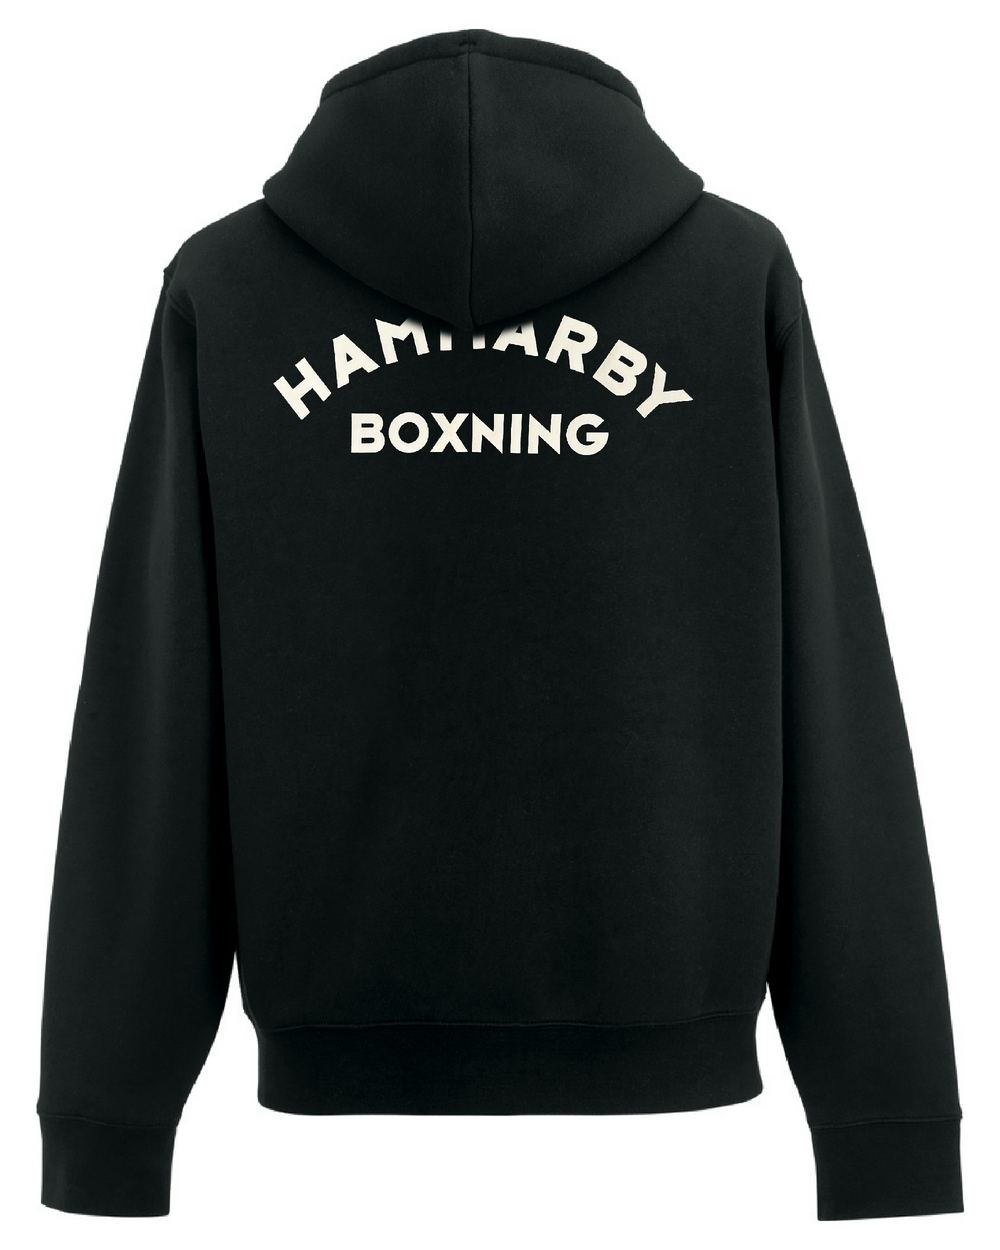 Hammarby Boxning - Zip Hoodie